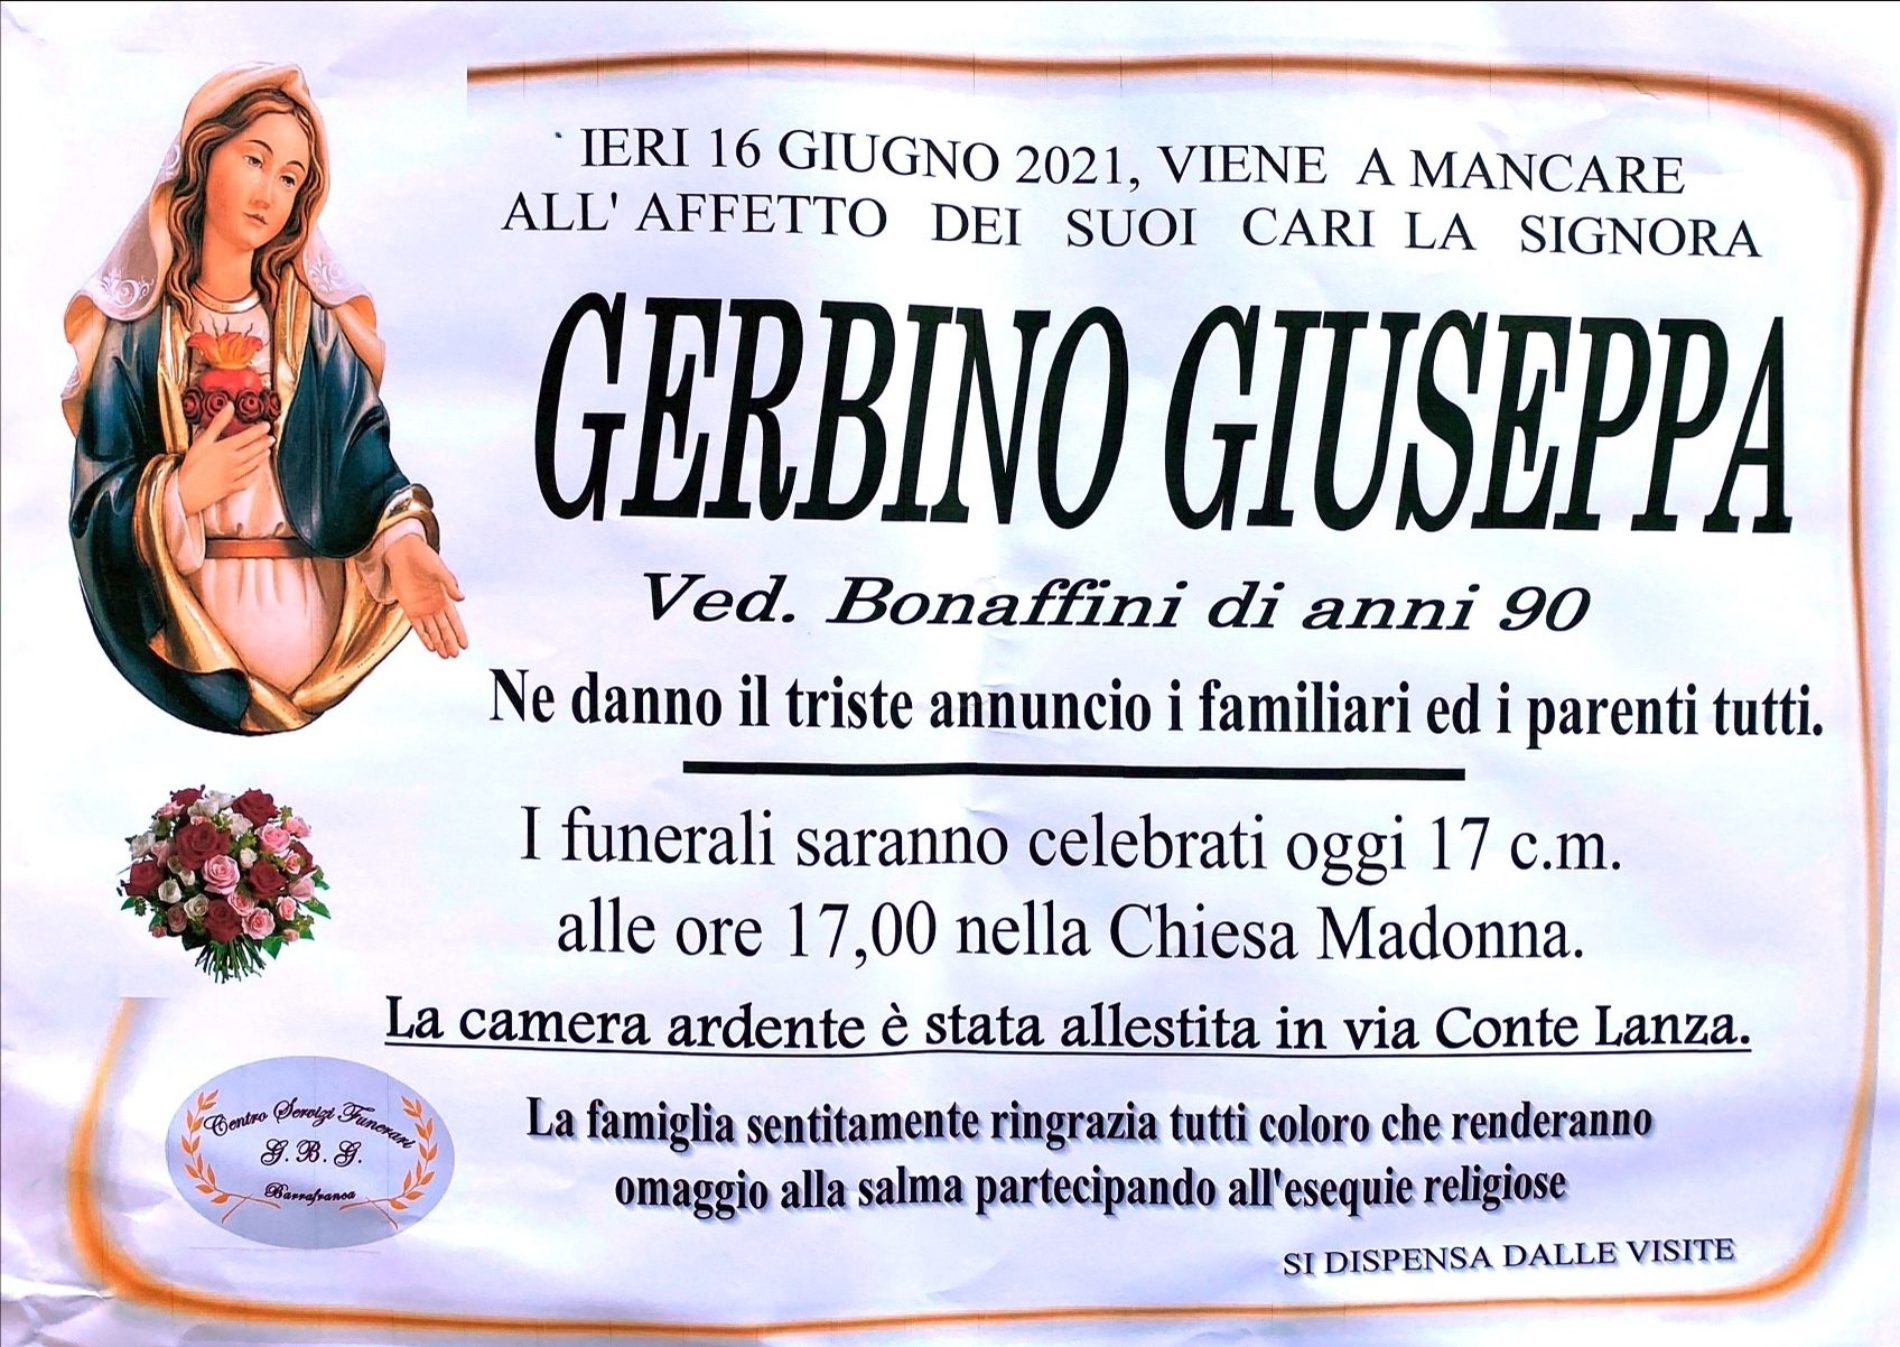 Annuncio servizi funerari agenzia G.B.G. sig.ra Gerbino Giuseppa ved. Bonaffini di anni 90